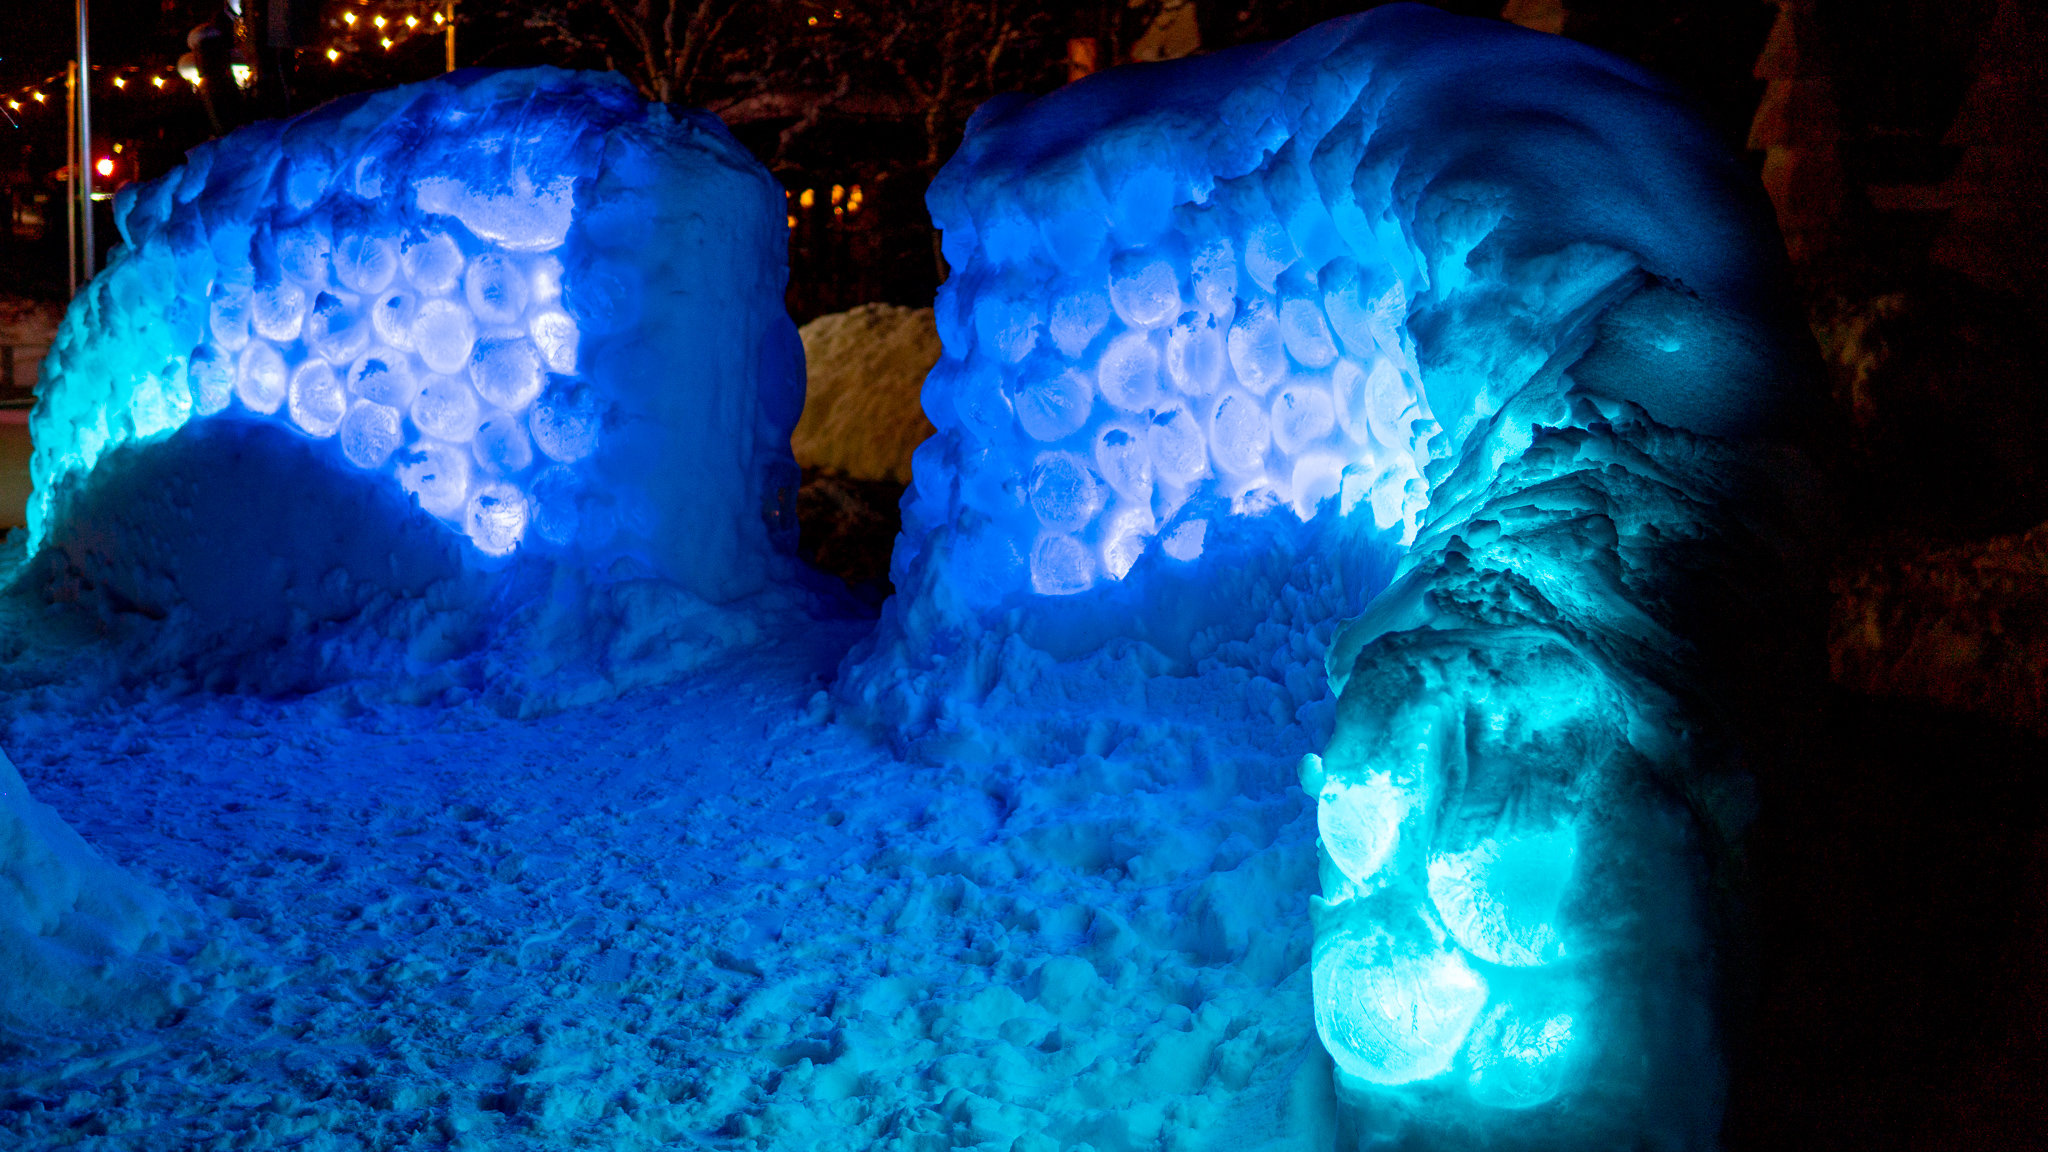  Artist : Bland Hoke  Ice, Snow, Slush, Fire, LED Light 